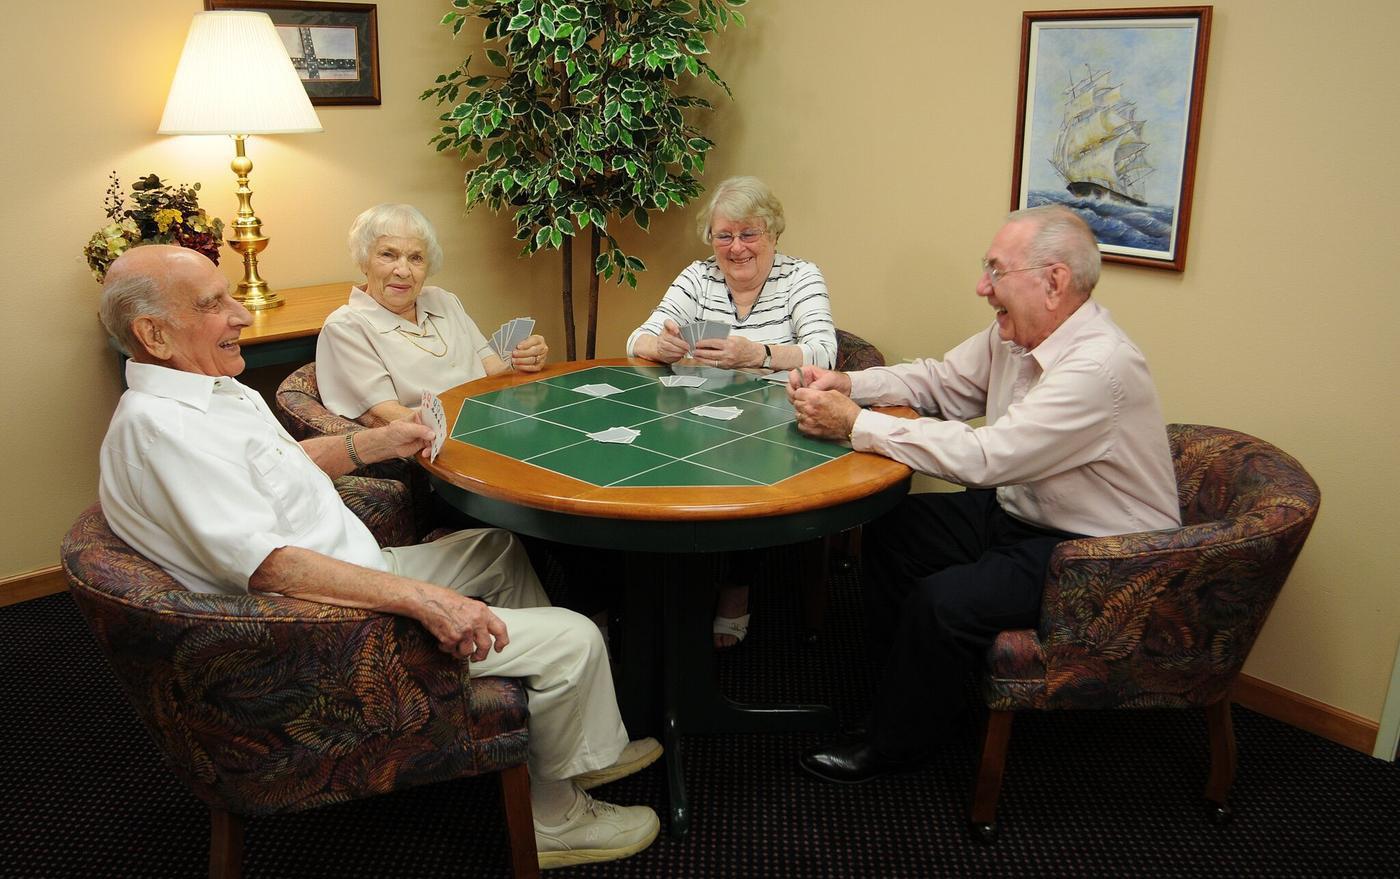 Card room poker players